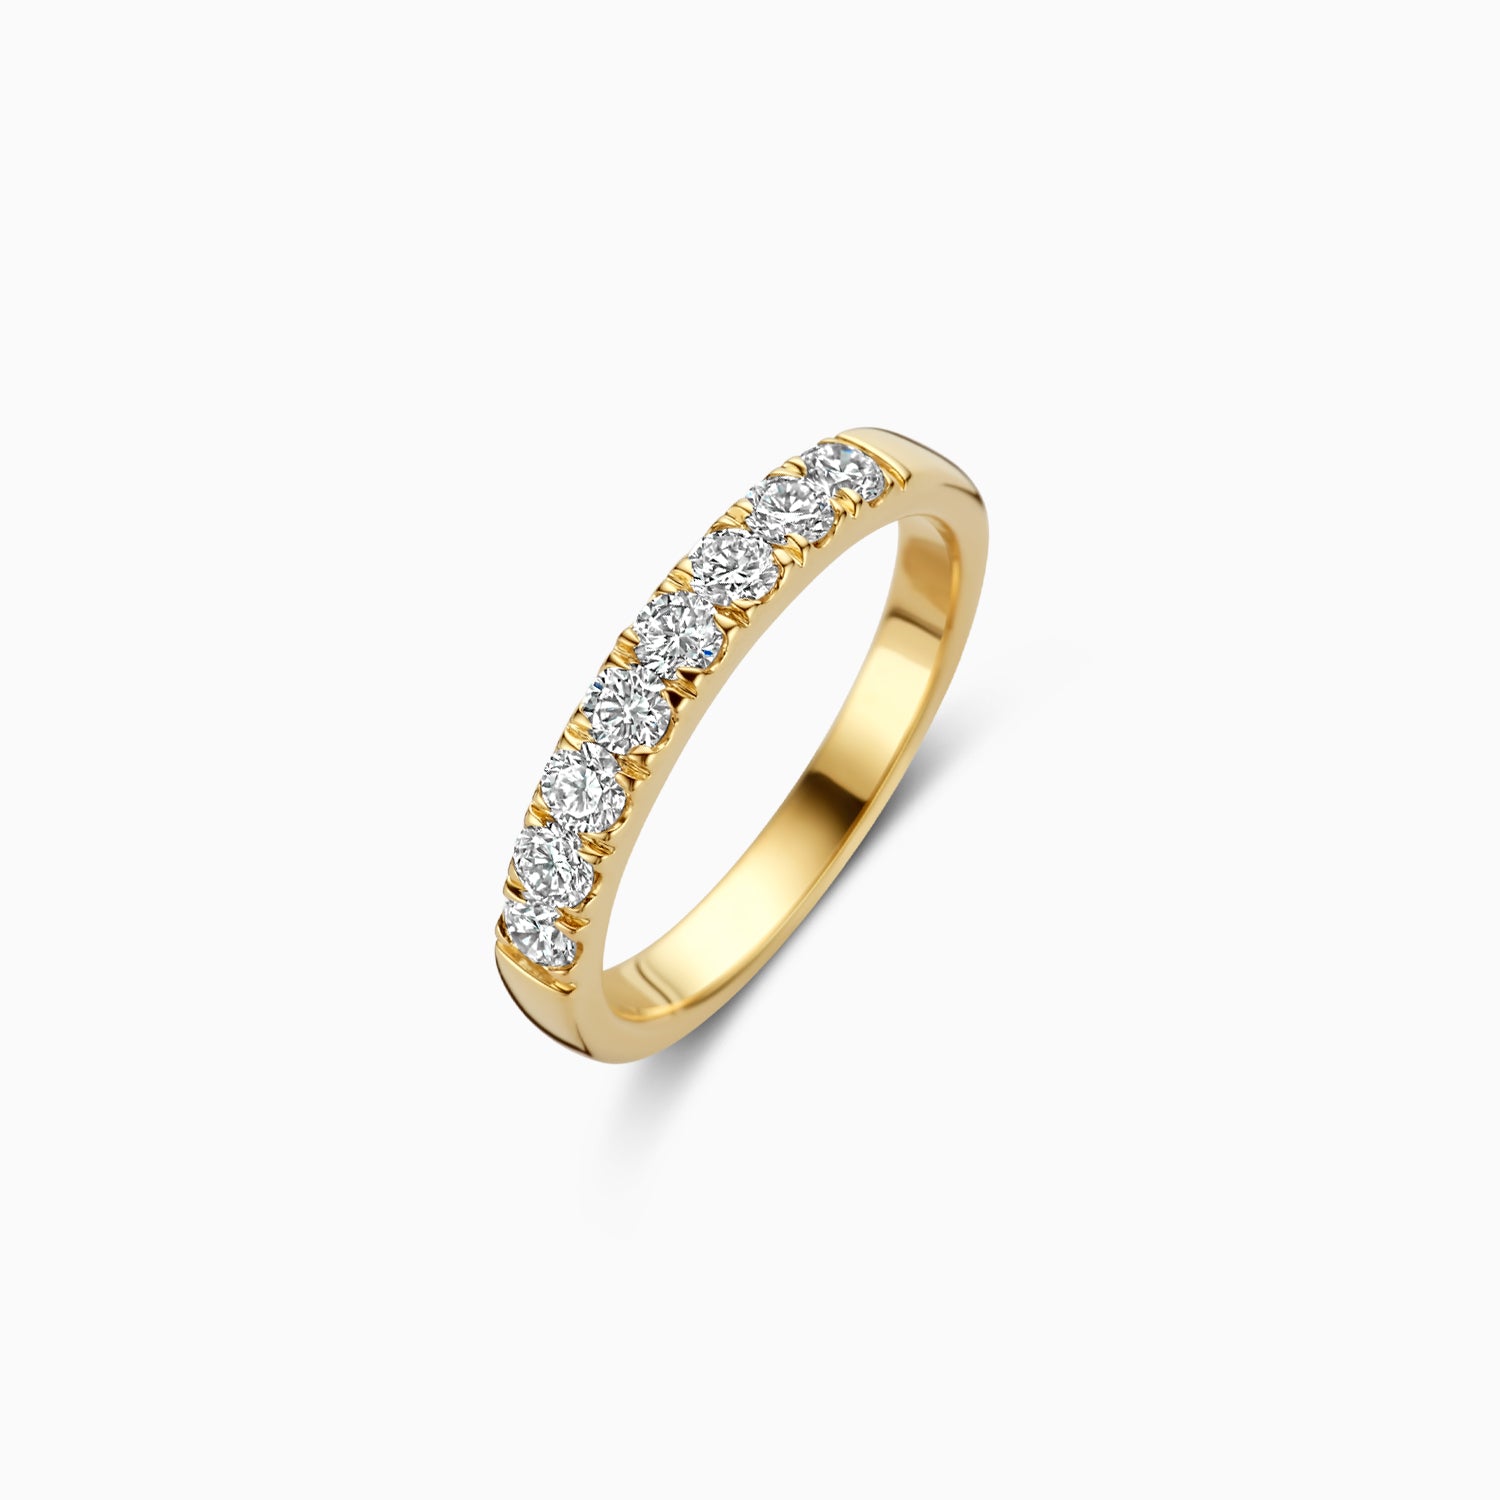 Lab diamonds ring LG1015Y - 14k Yellow gold